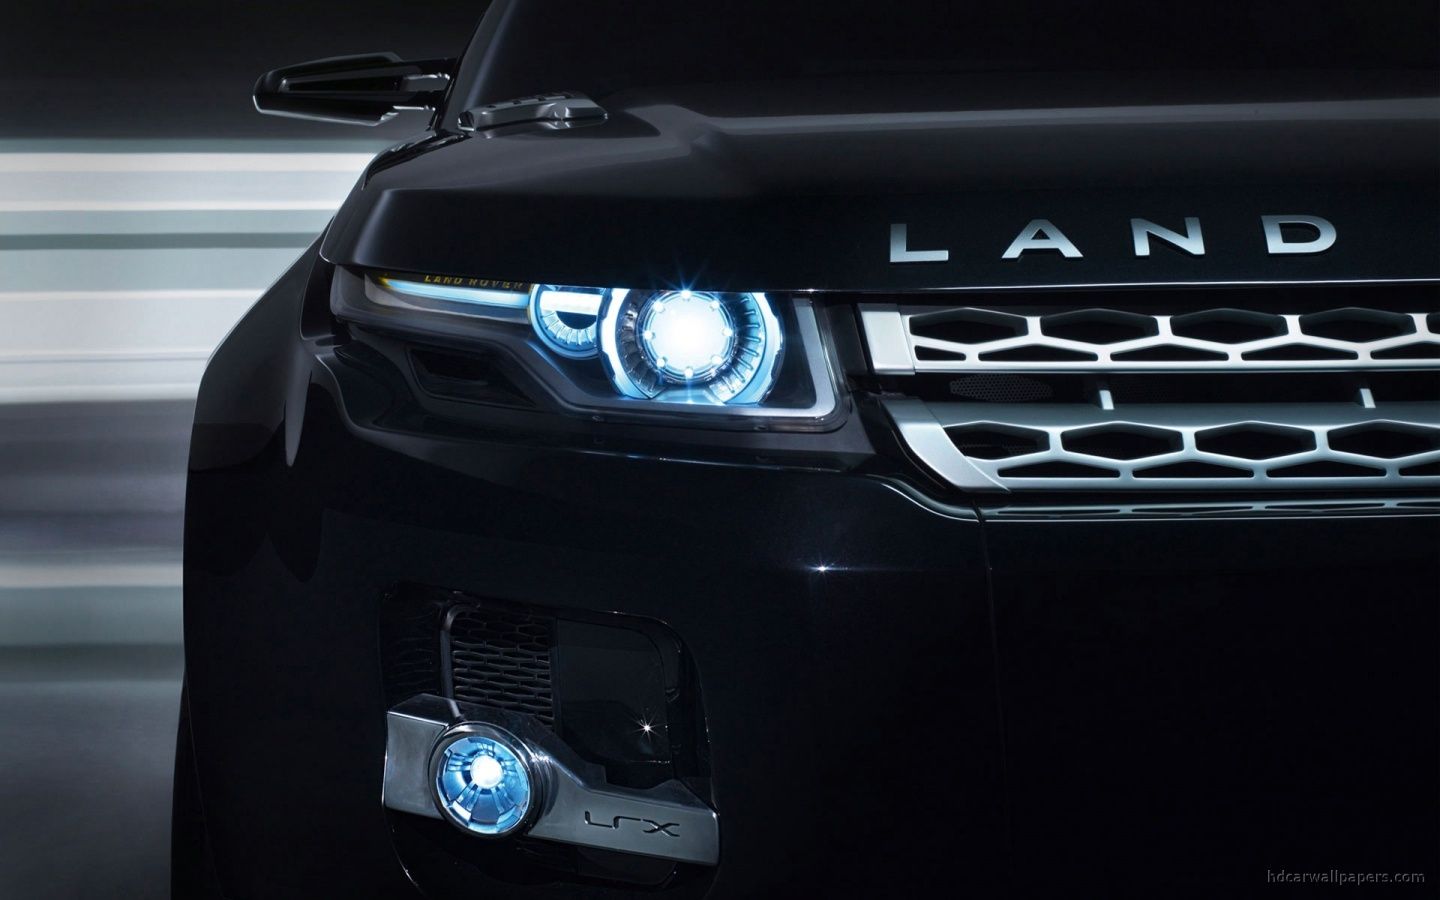 Black Range Rover Image